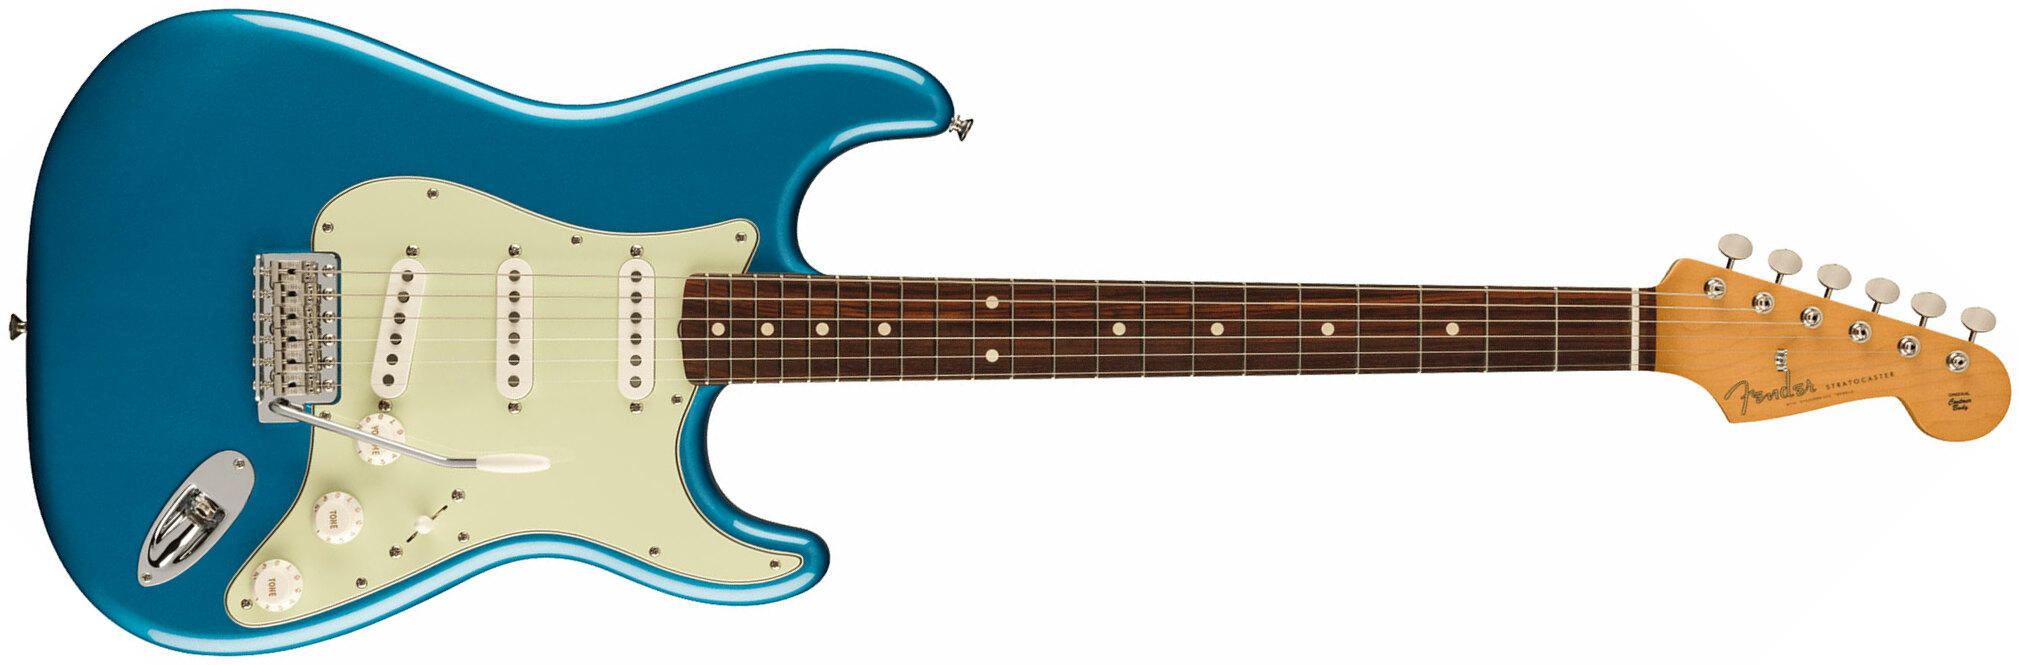 Fender Strat 60s Vintera 2 Mex 3s Trem Rw - Lake Placid Blue - E-Gitarre in Str-Form - Main picture